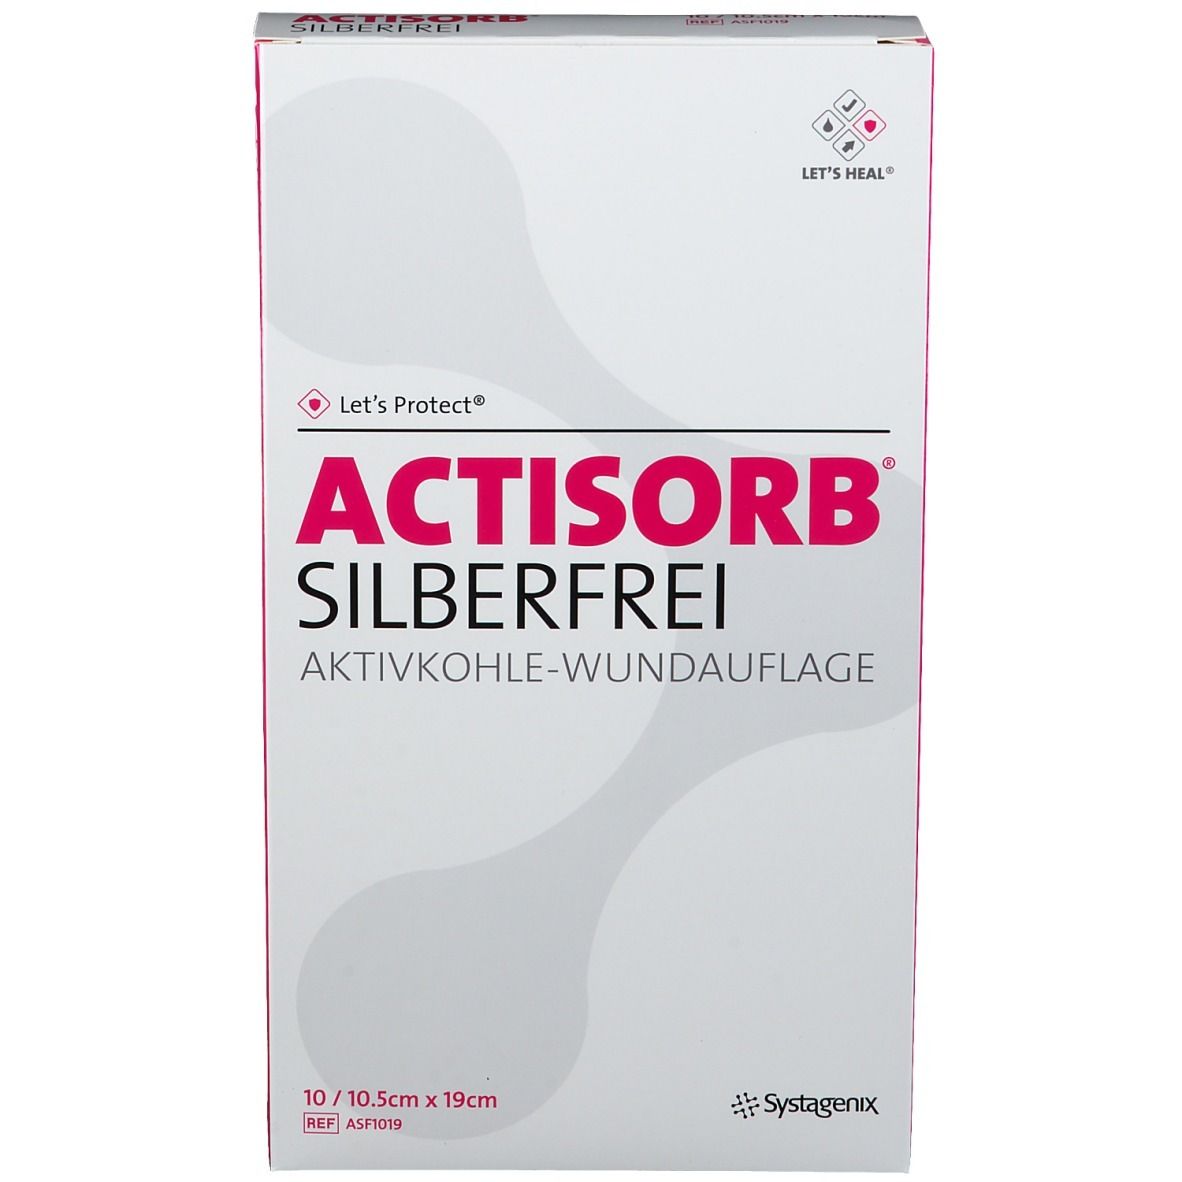 Actisorb® Silberfrei 10,5 x 19cm